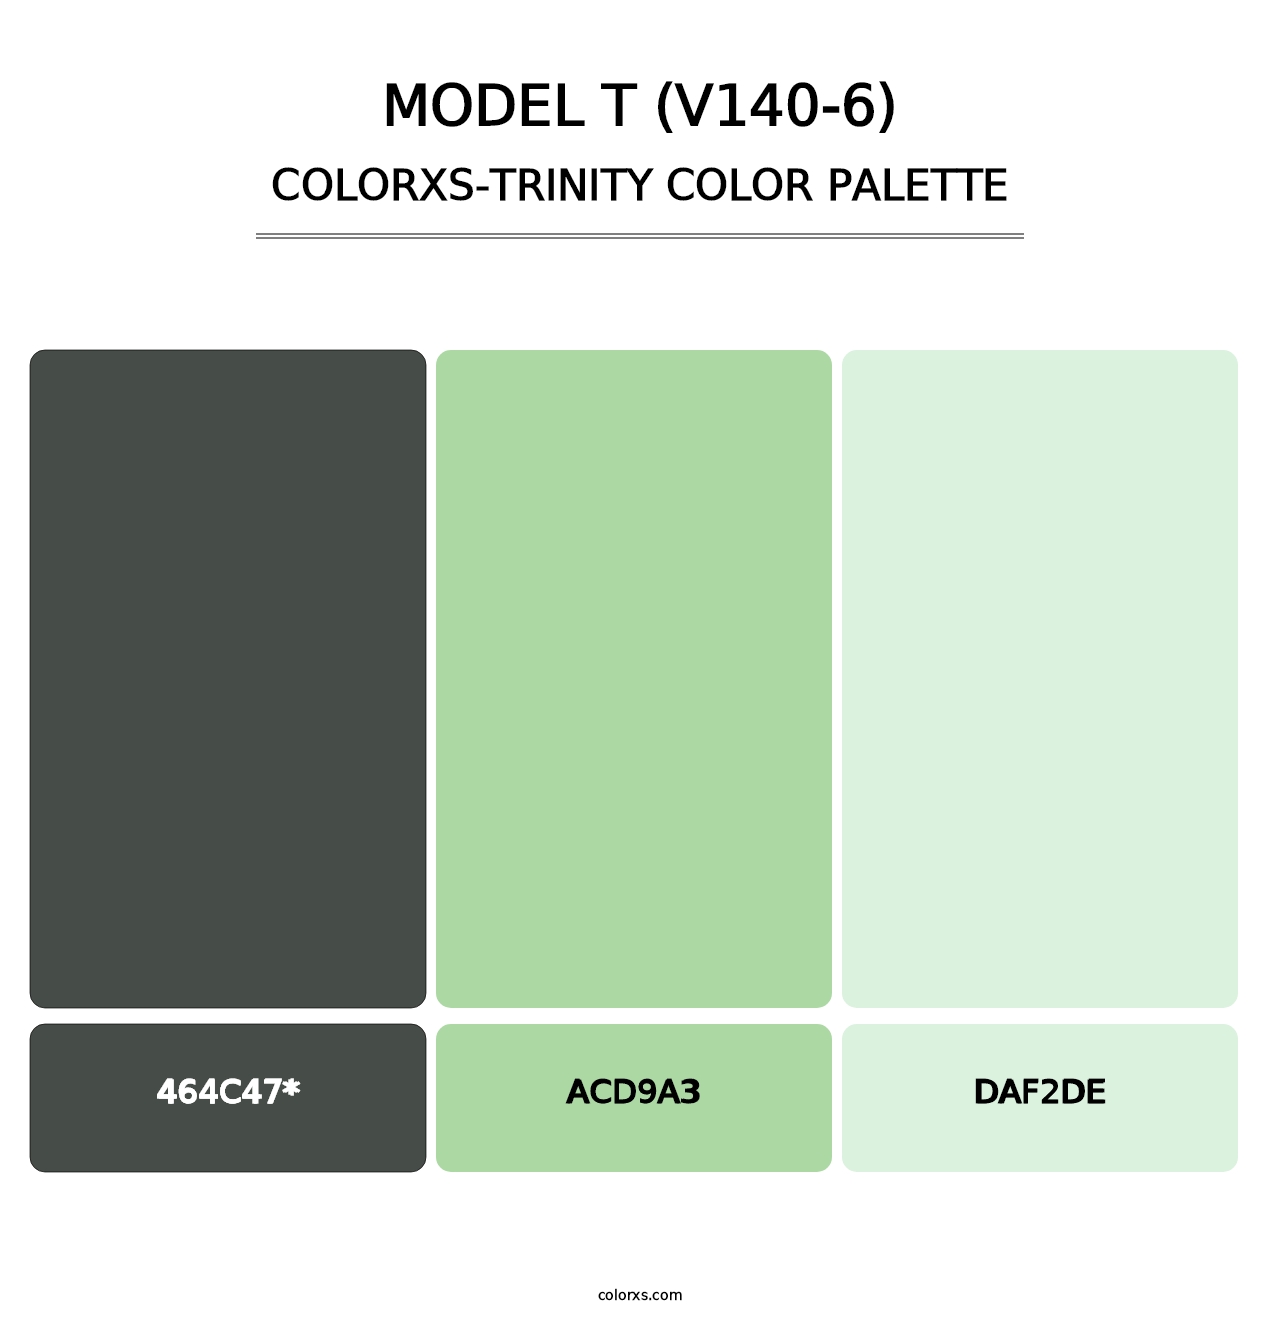 Model T (V140-6) - Colorxs Trinity Palette